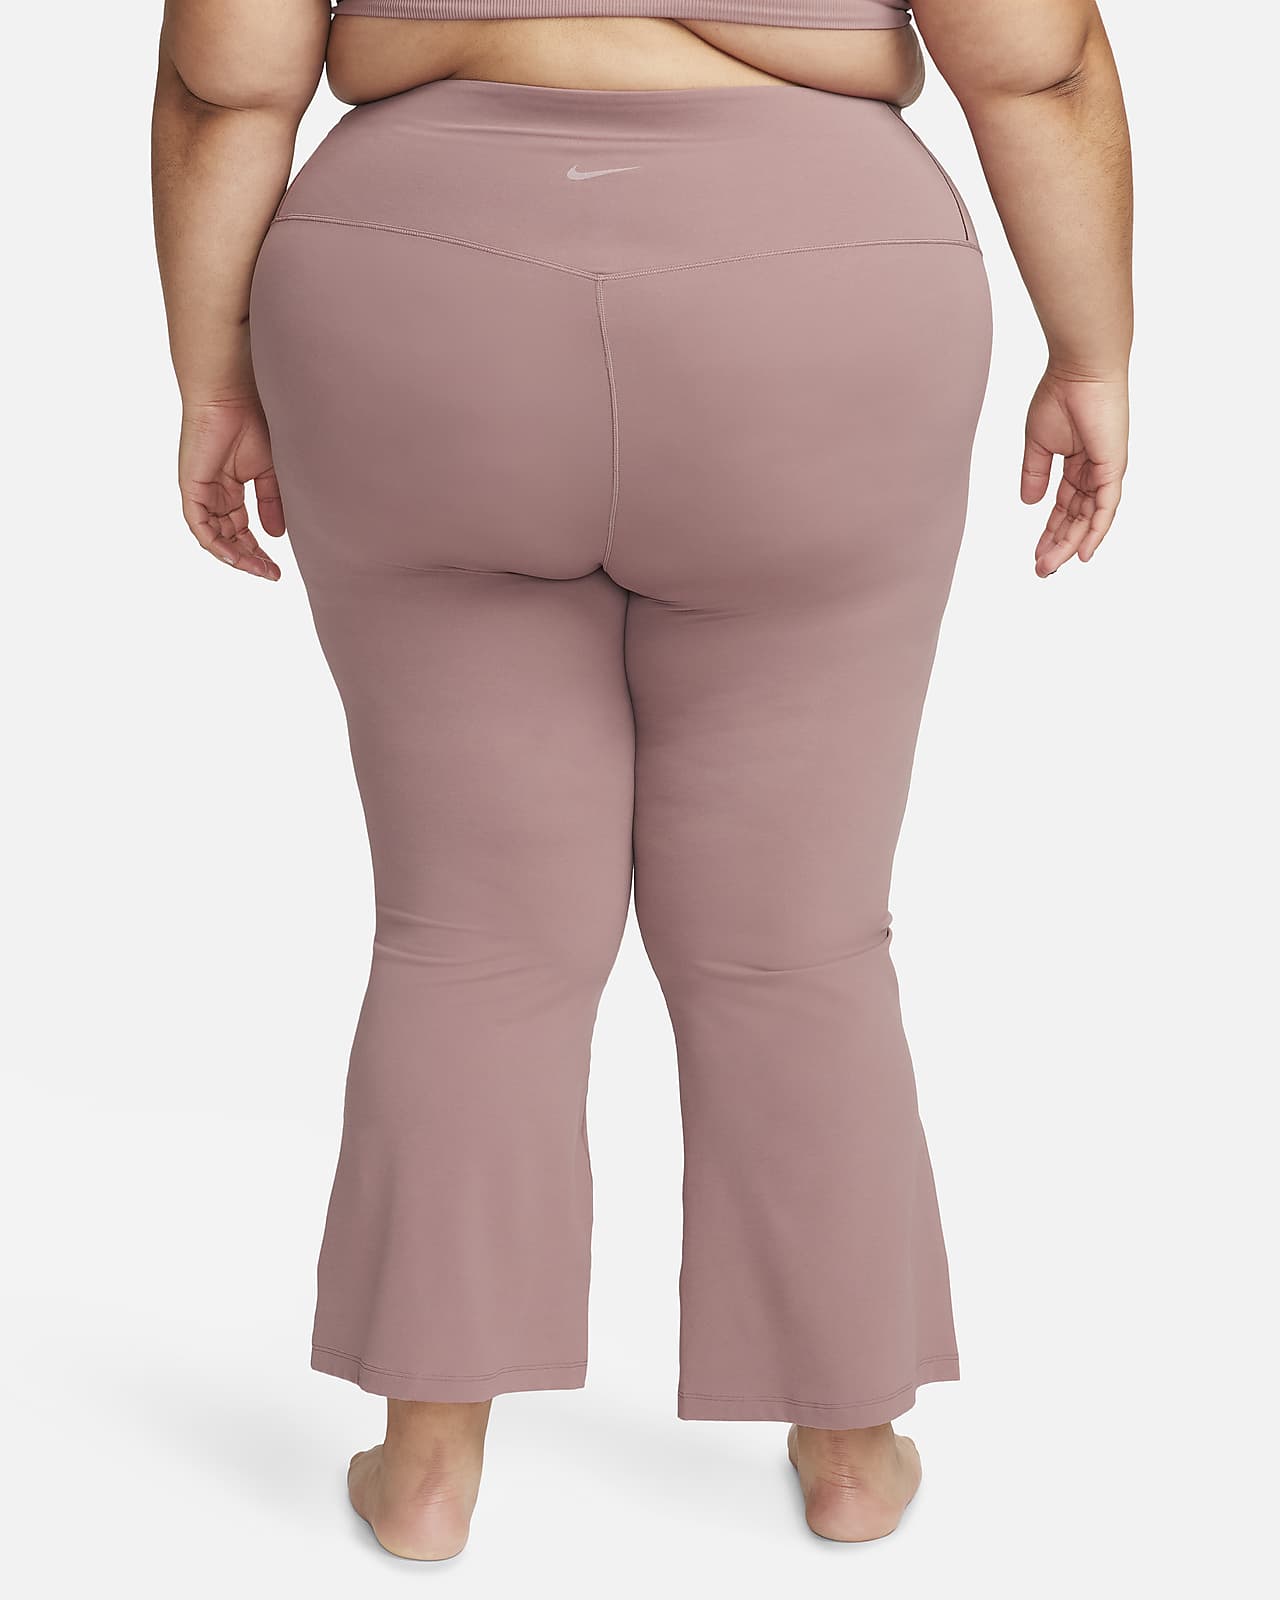 YUNAFFT Yoga Pants for Women Clearance Plus Size Fashion Women Hip